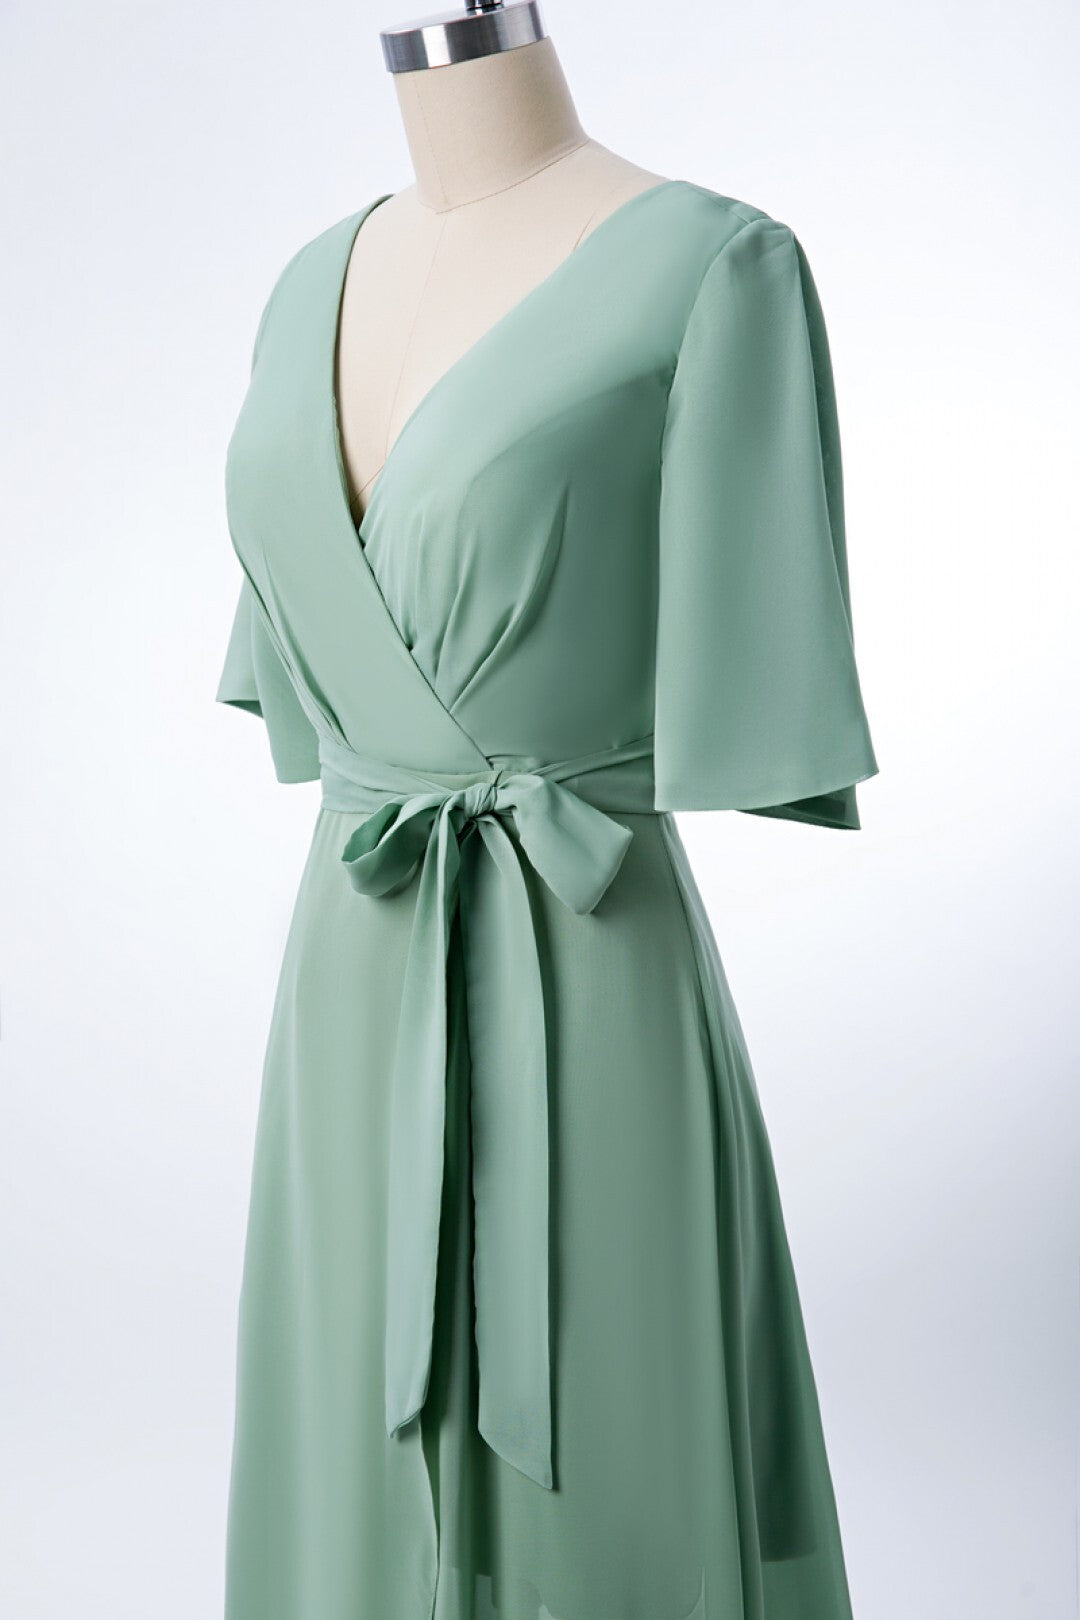 Short Sleeves Green Chiffon Wrap Long Party Dress